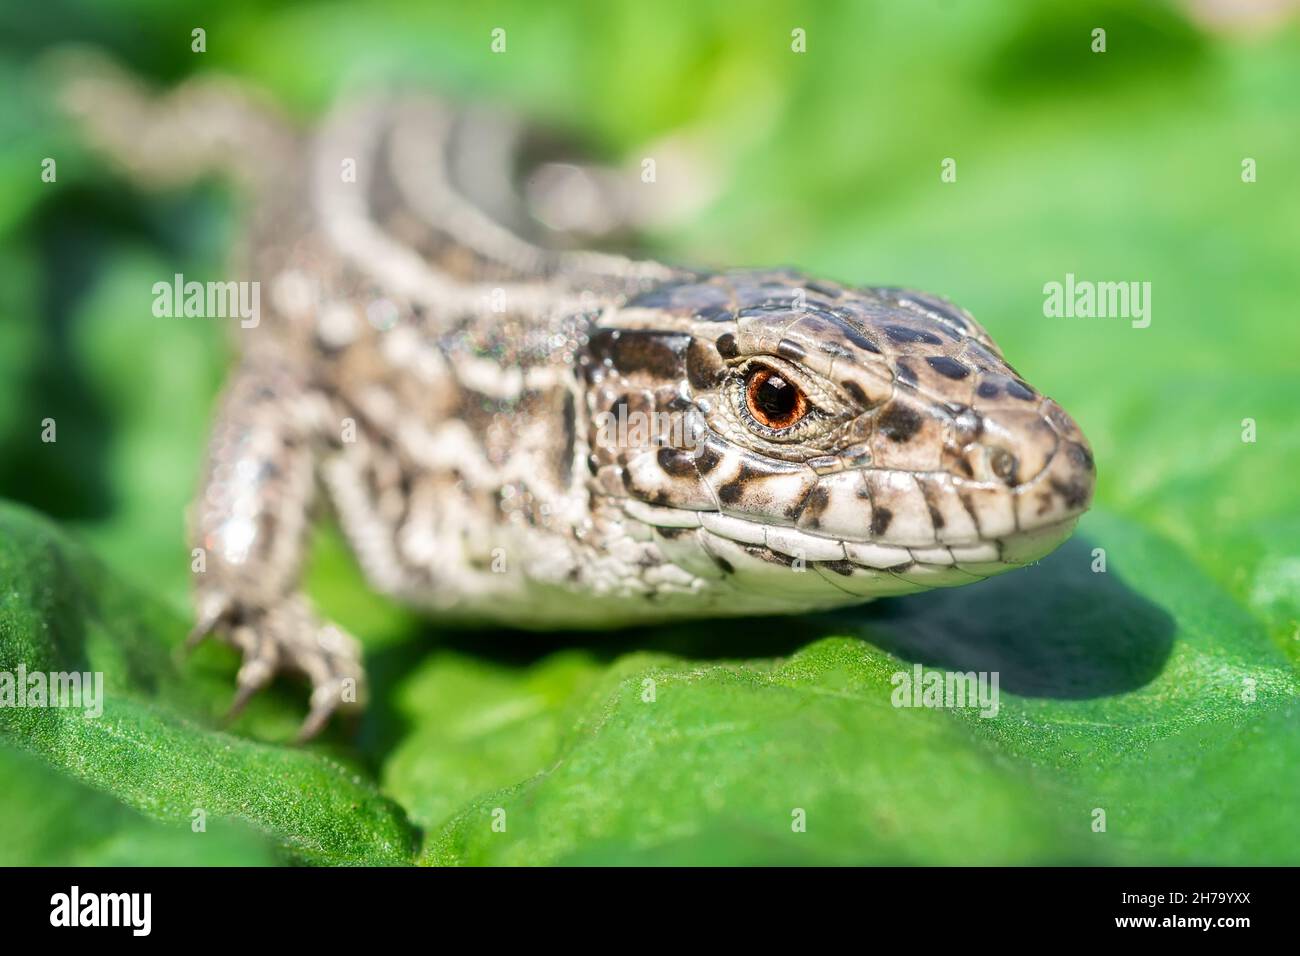 The head of a female lizard, macro photo of the head of a female lizard, Lacerta agilis Stock Photo